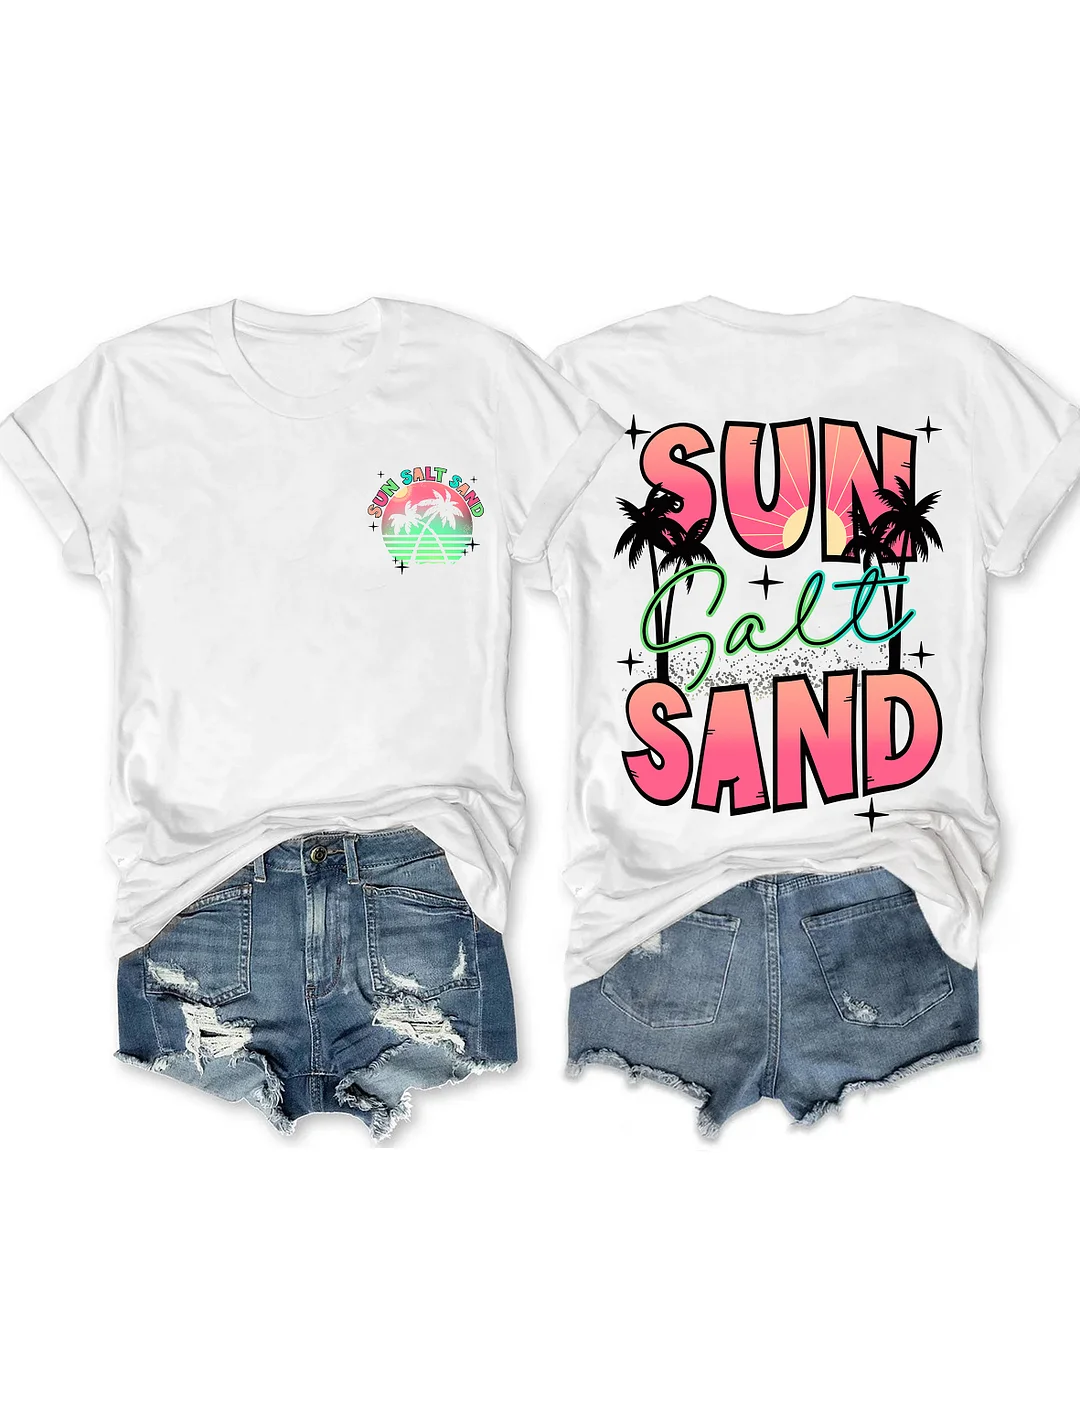 Sun salt sand T-shirt